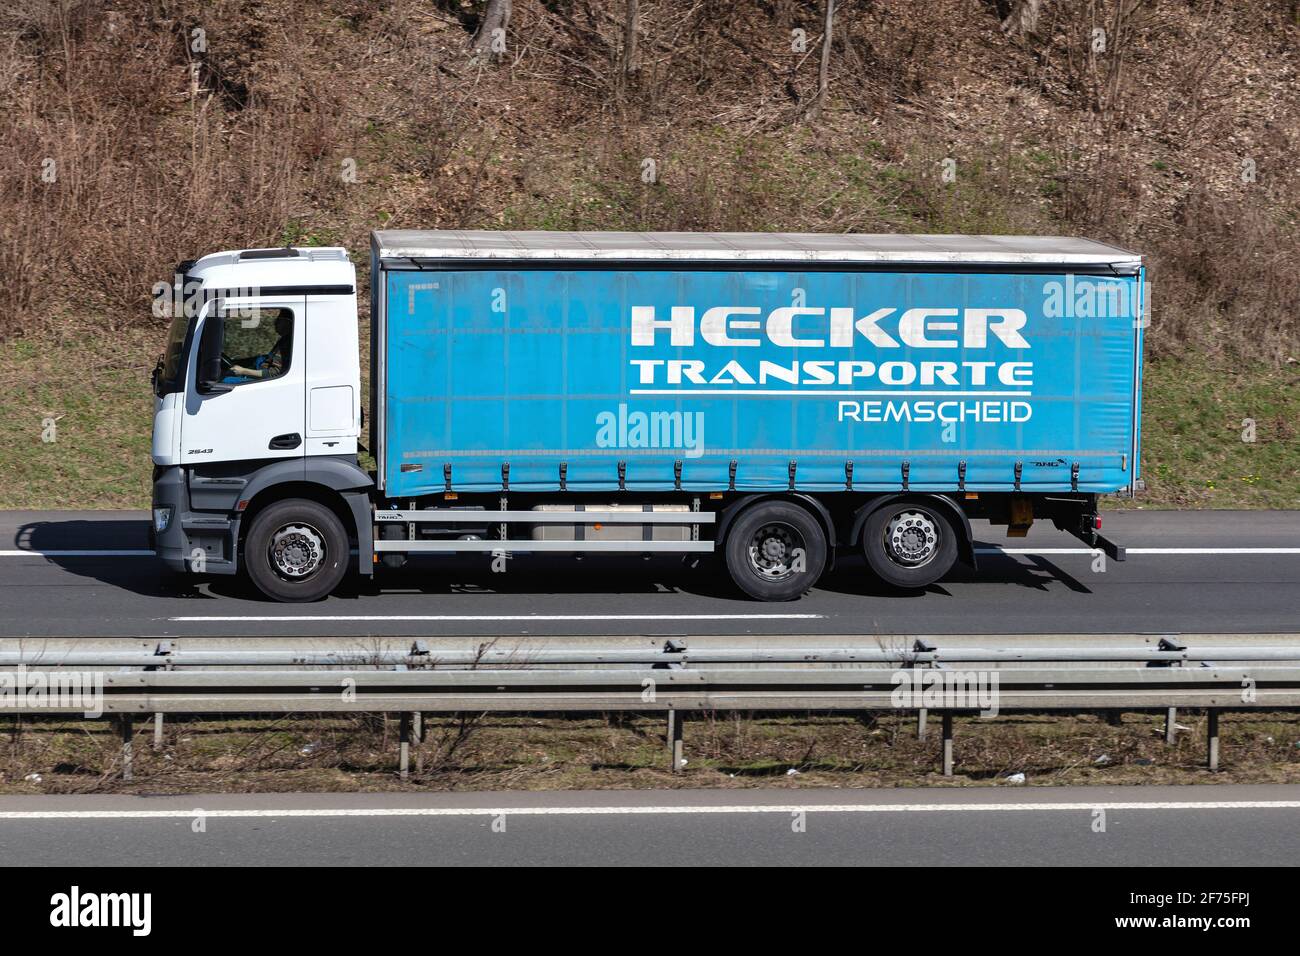 Hecker Transporte Mercedes-Benz truck on motorway. Stock Photo